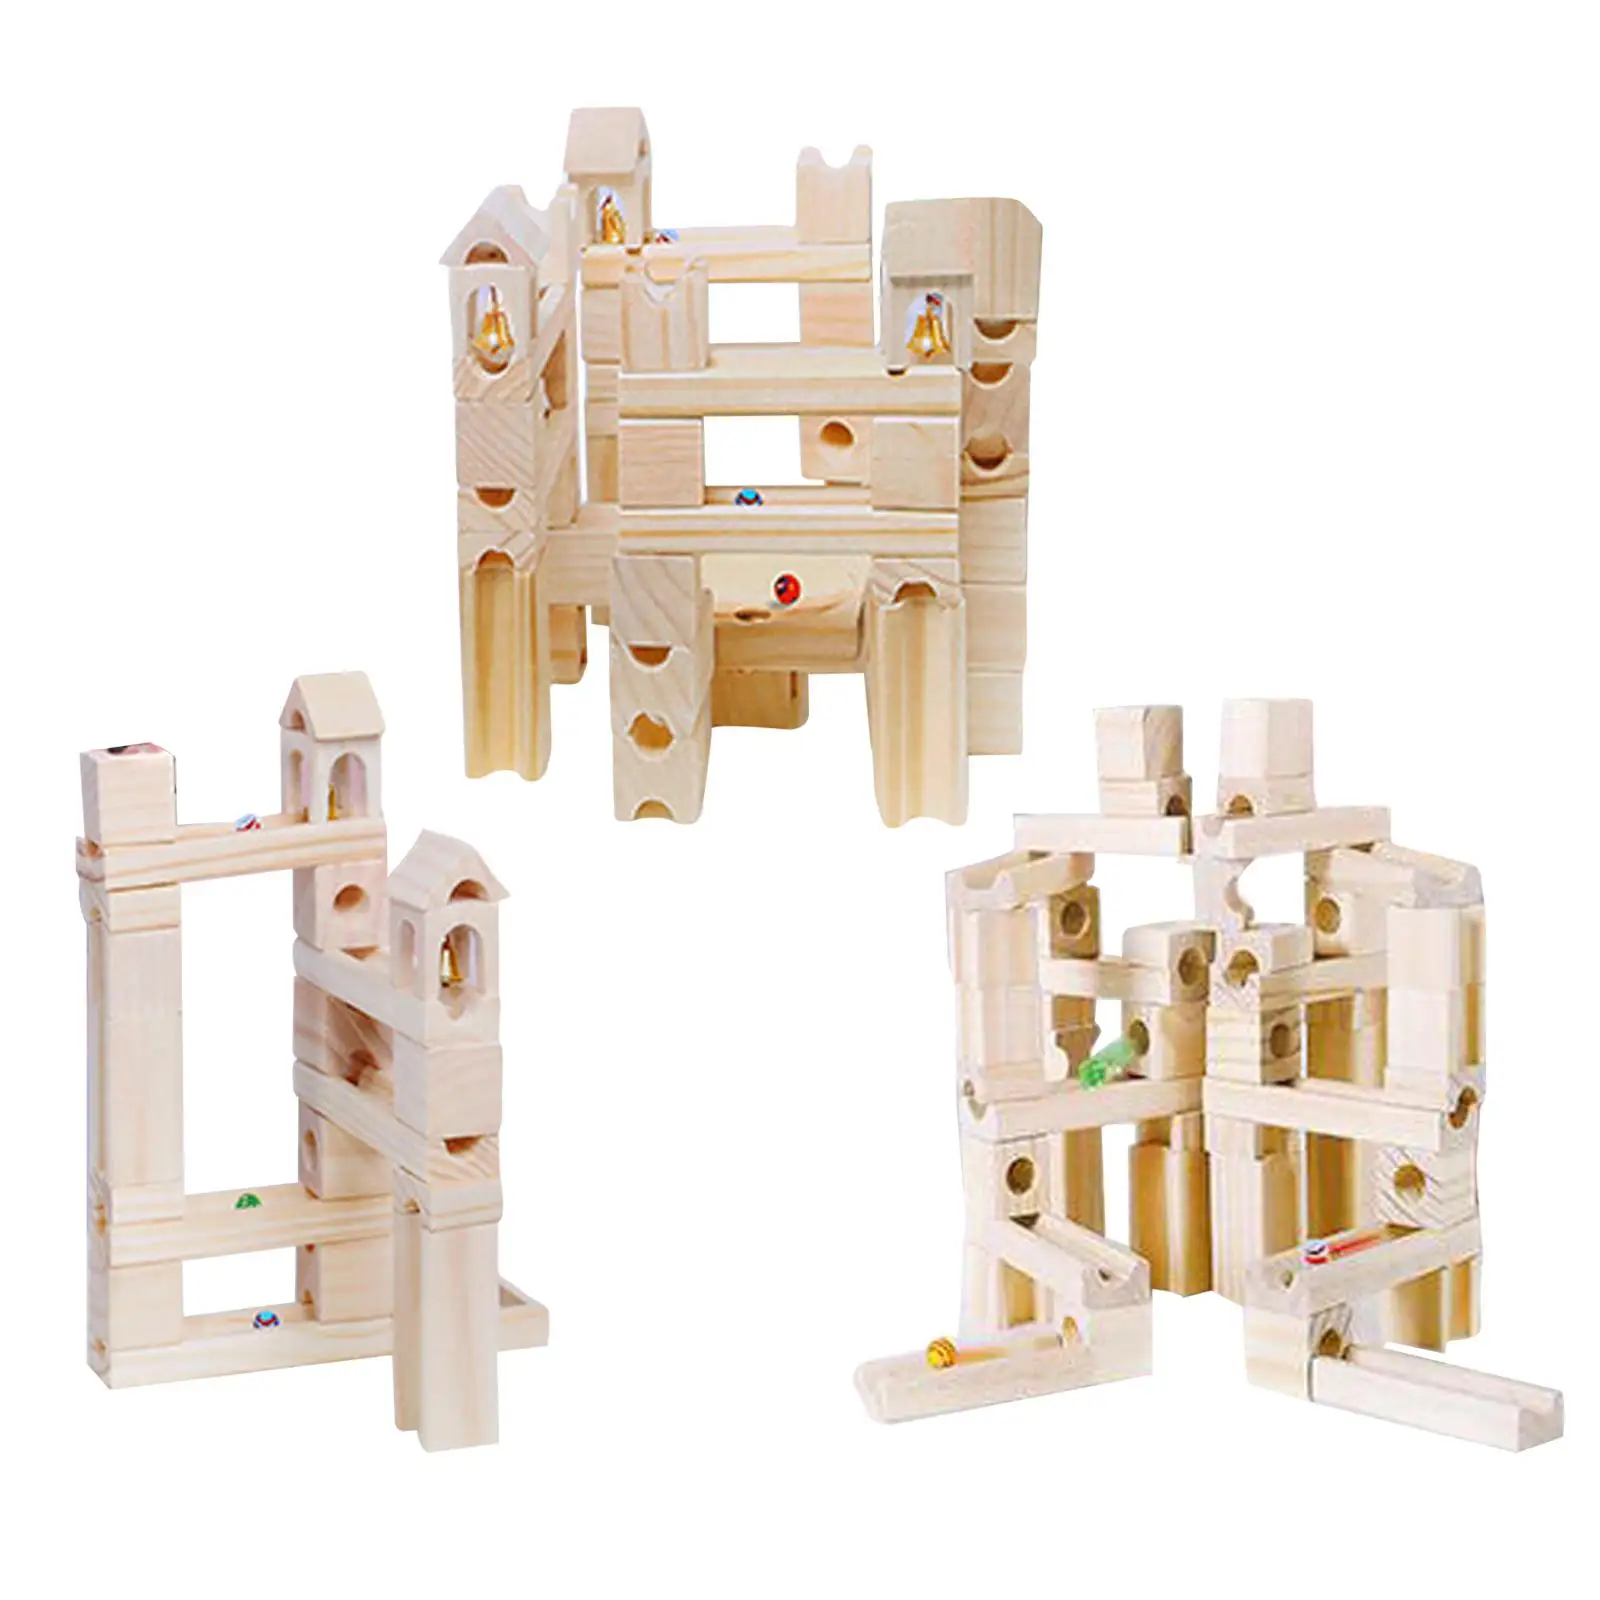 Wood Marble Run building blocks Sensory Toy Early Educational for Boys Girls